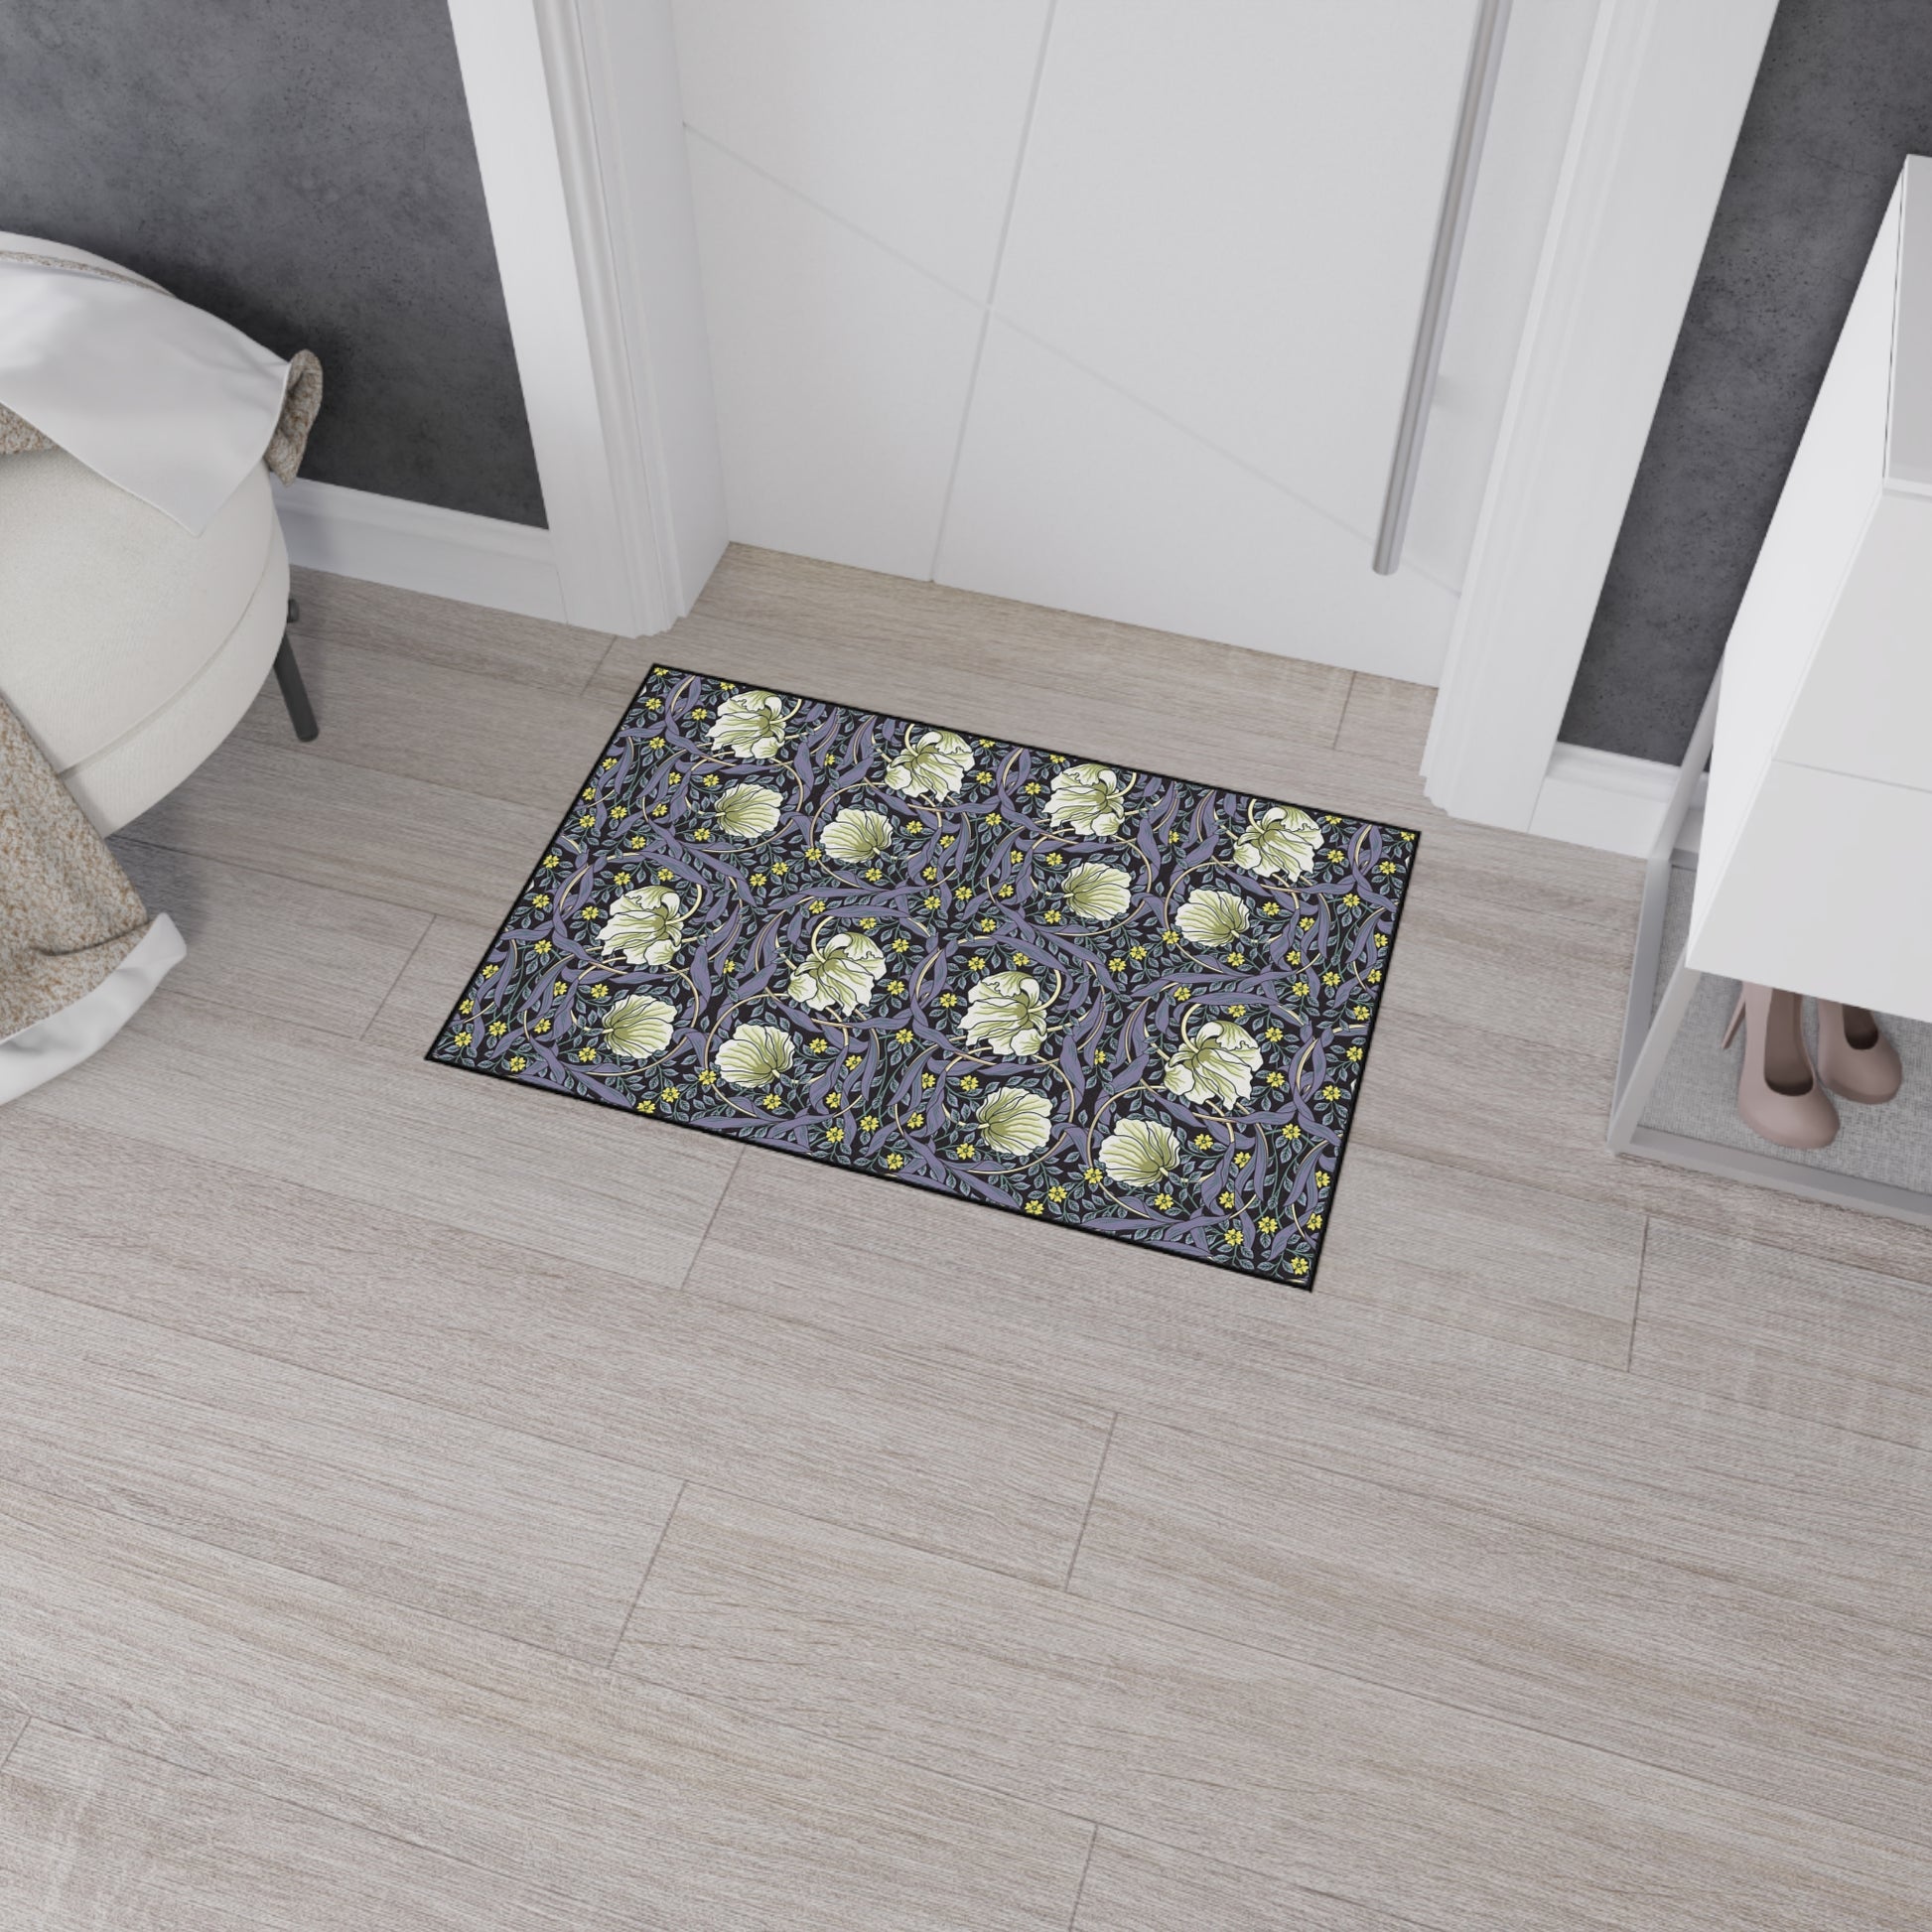 william-morris-co-heavy-duty-floor-mat-floor-mat-pimpernel-collection-lavender-13